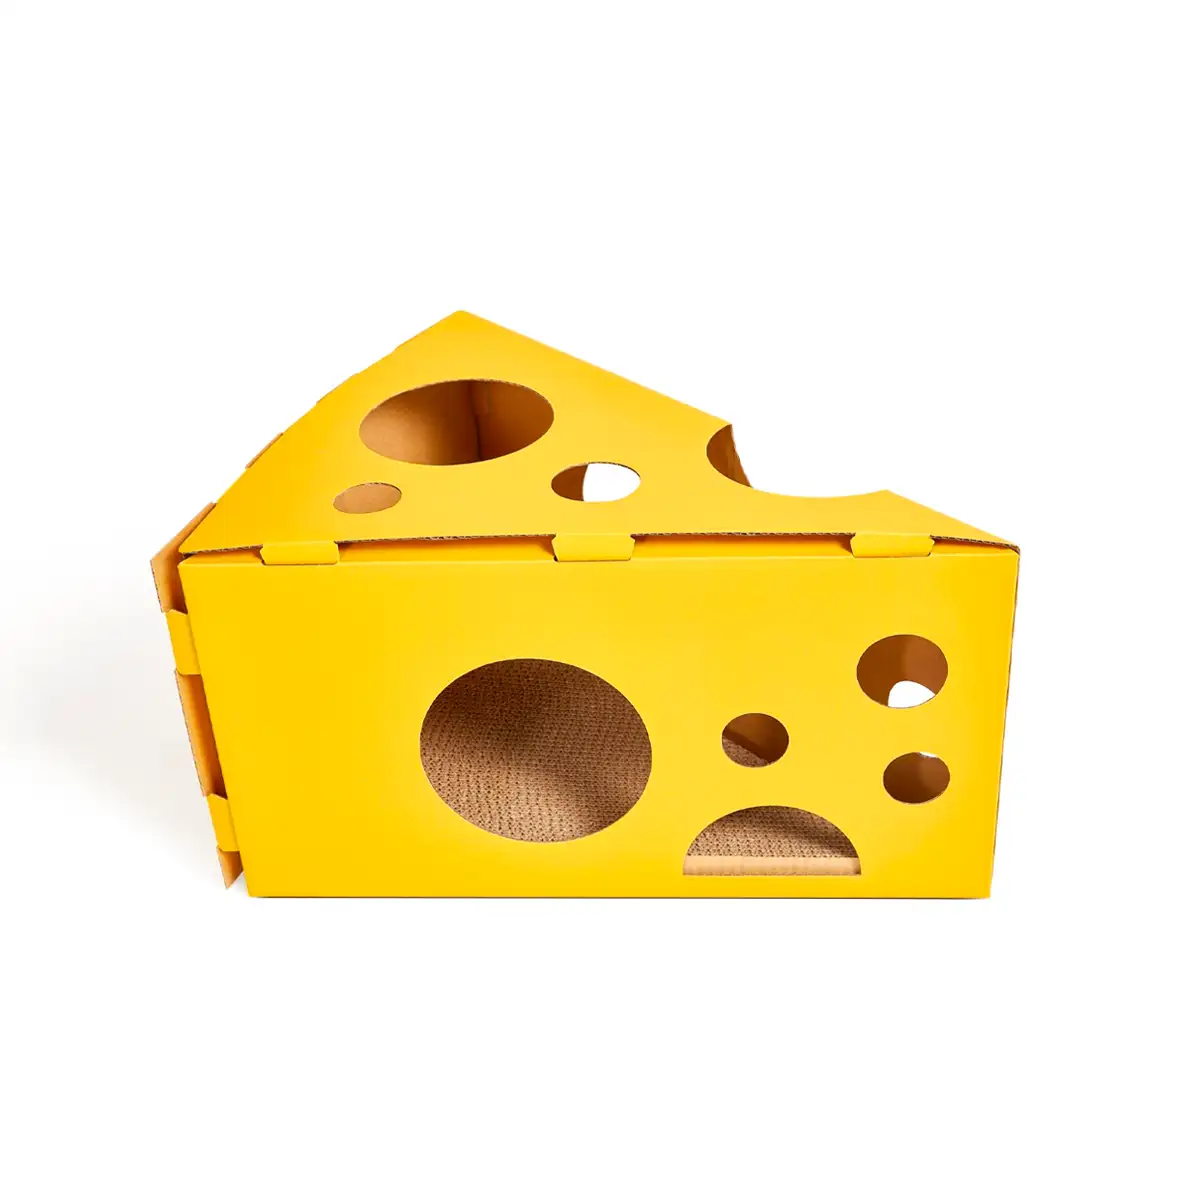 Vetreska - Cheese Cat Scratching Box